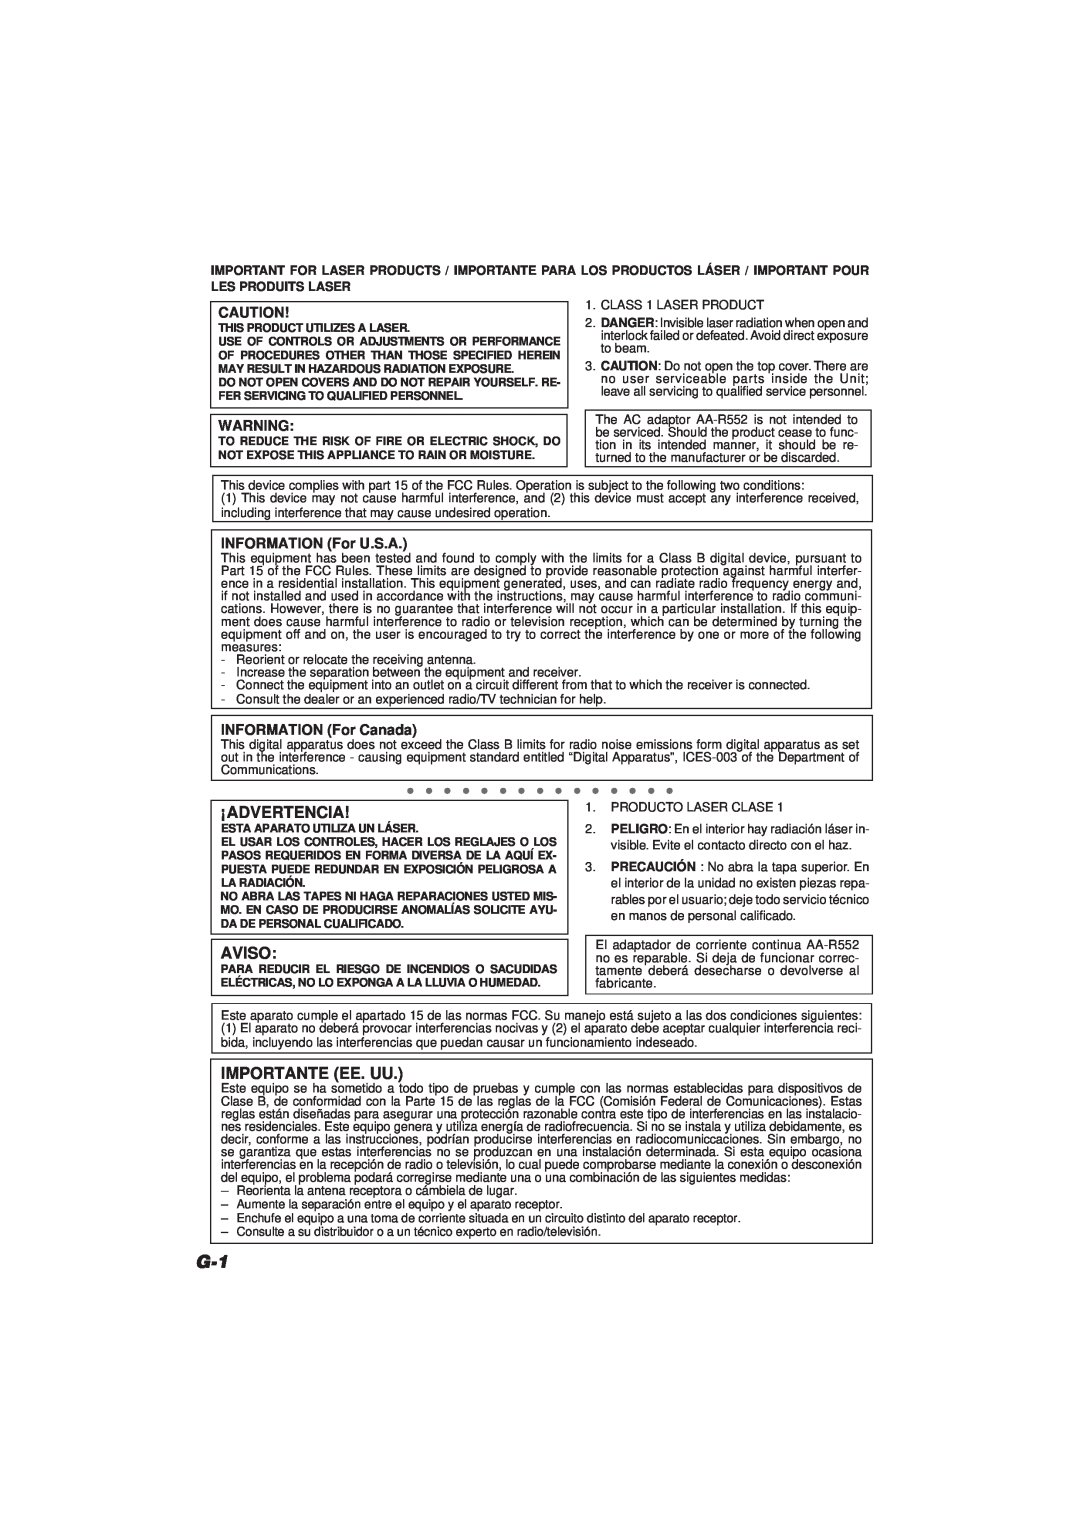 JVC XM-R70SL/BK manual ¡Advertencia, Aviso, Importante Ee. Uu, INFORMATION For U.S.A, INFORMATION For Canada 